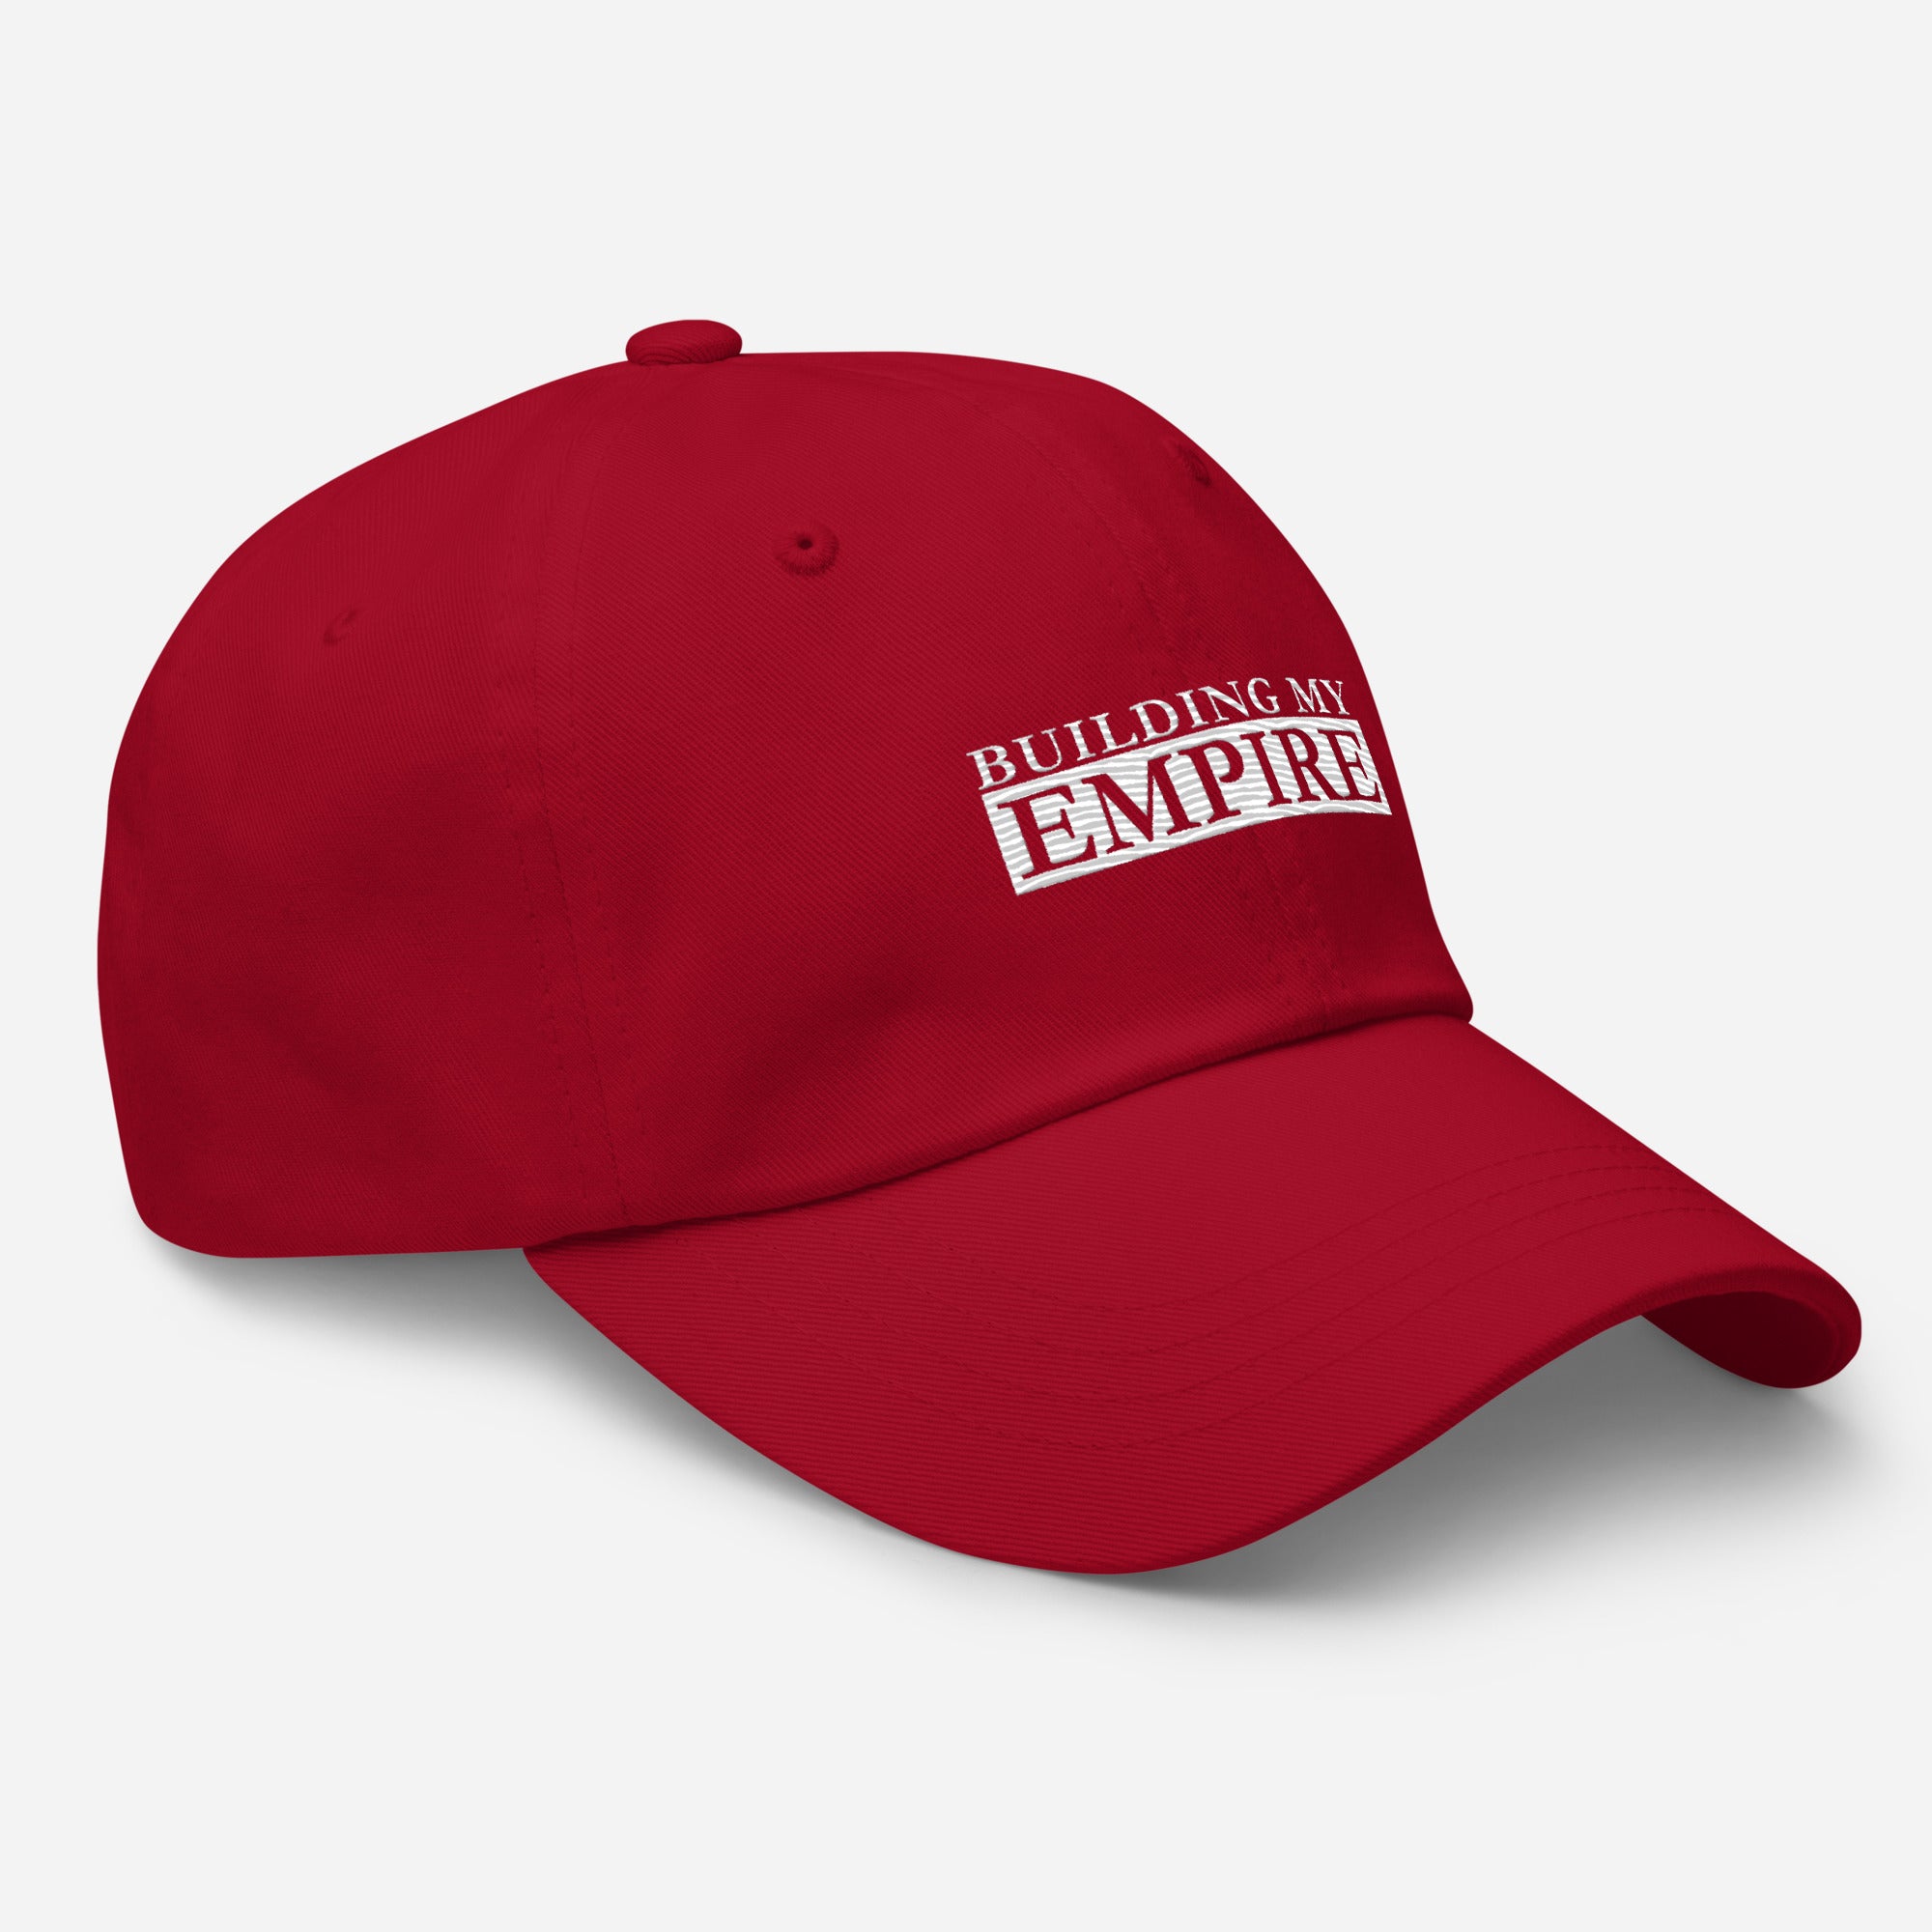 Hat | Building My Empire